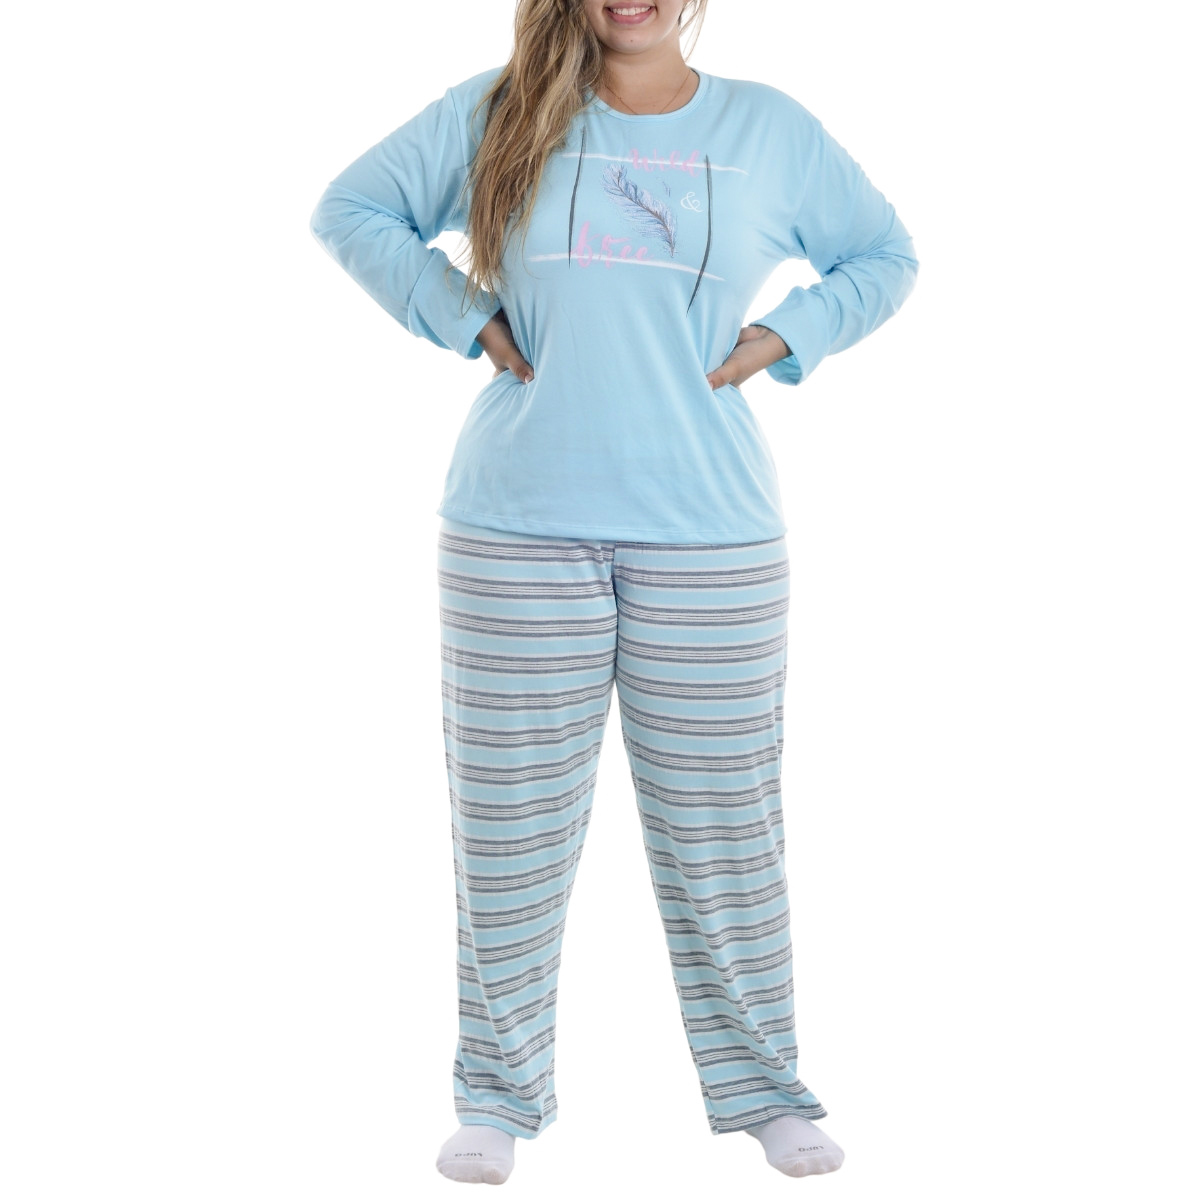 Pijama de Inverno plus size Feminino Suede Listrado Victory